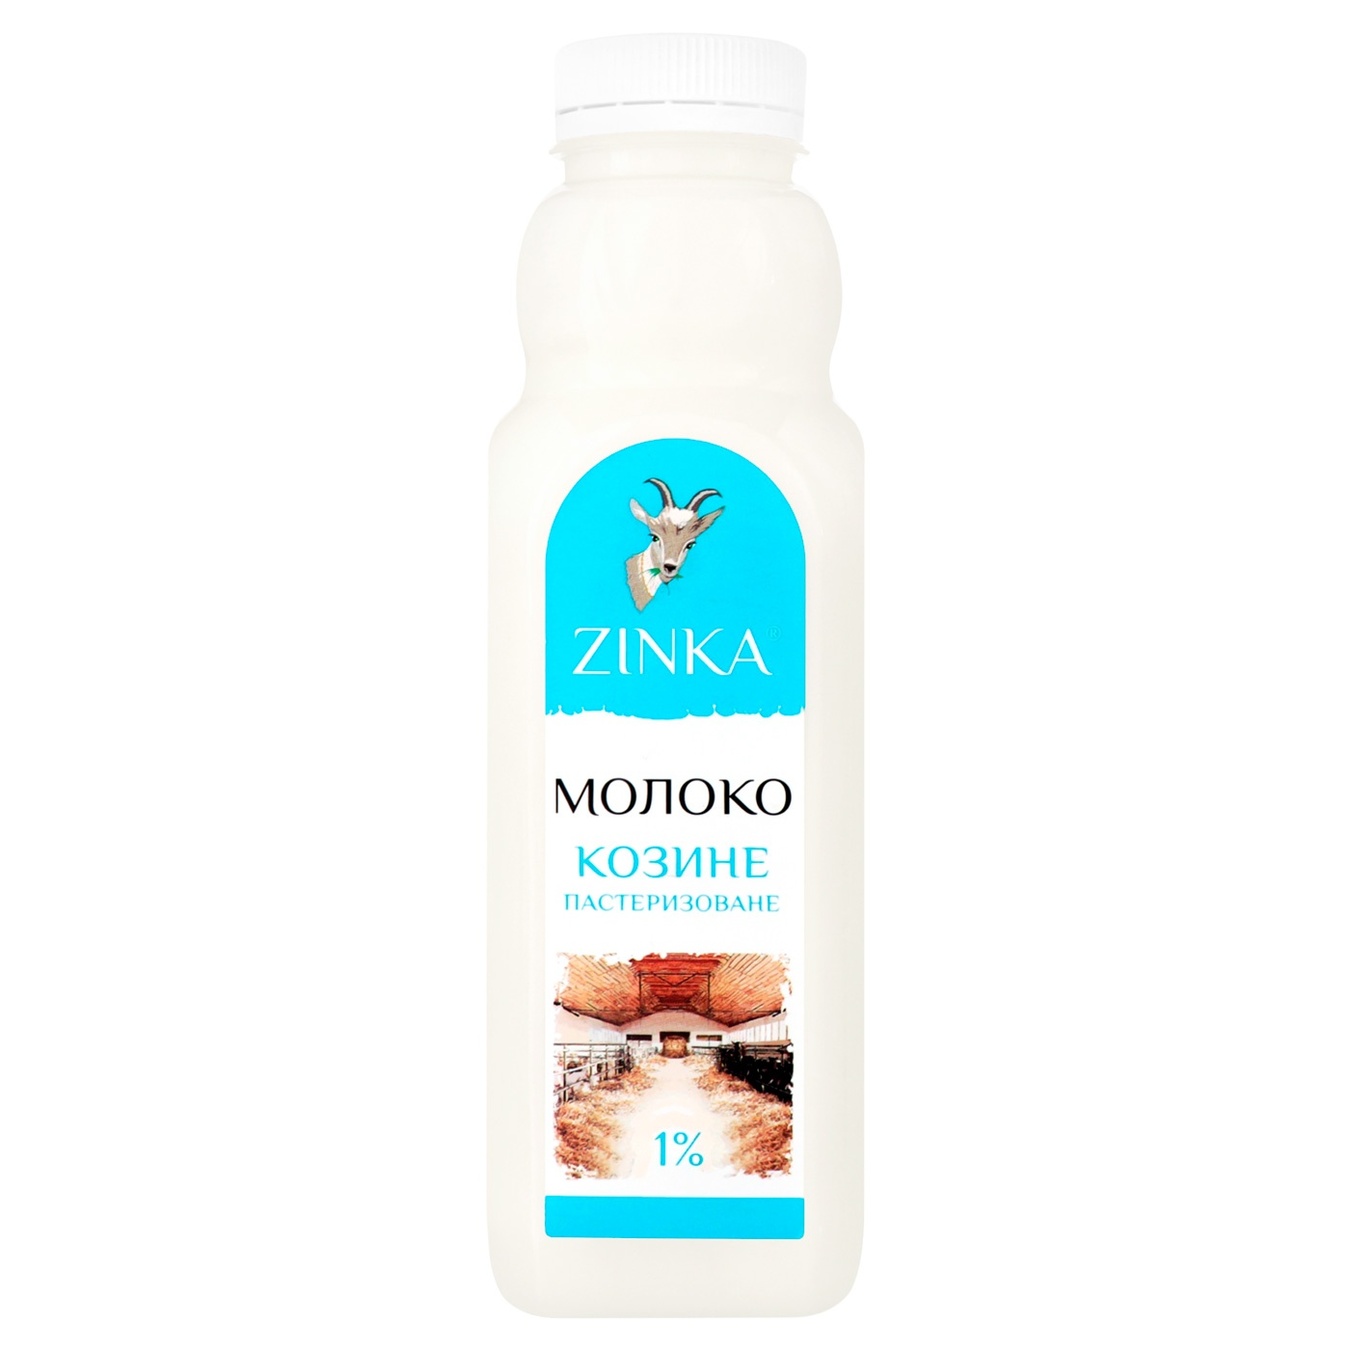 Zinka Goat's Pasteurized Milk 1% 510g